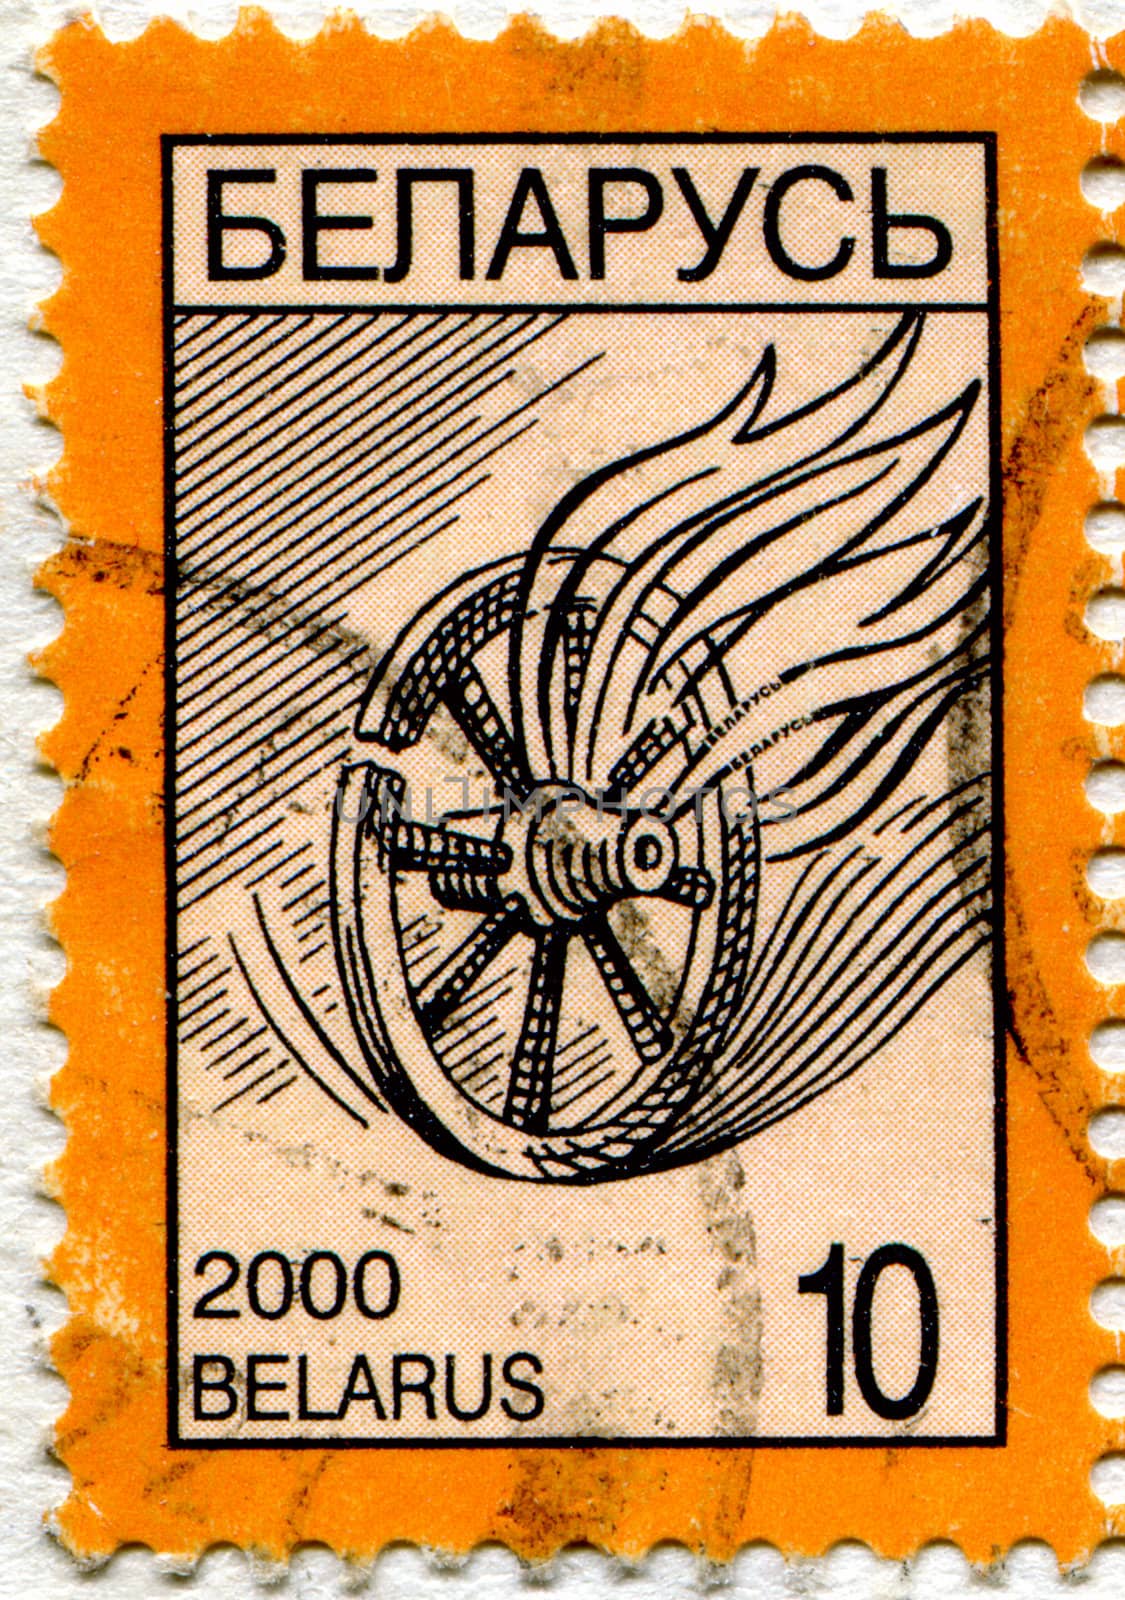 BELARUS - CIRCA 2000: stamp printed by Belarus, shows vintage wheel, circa 2000.